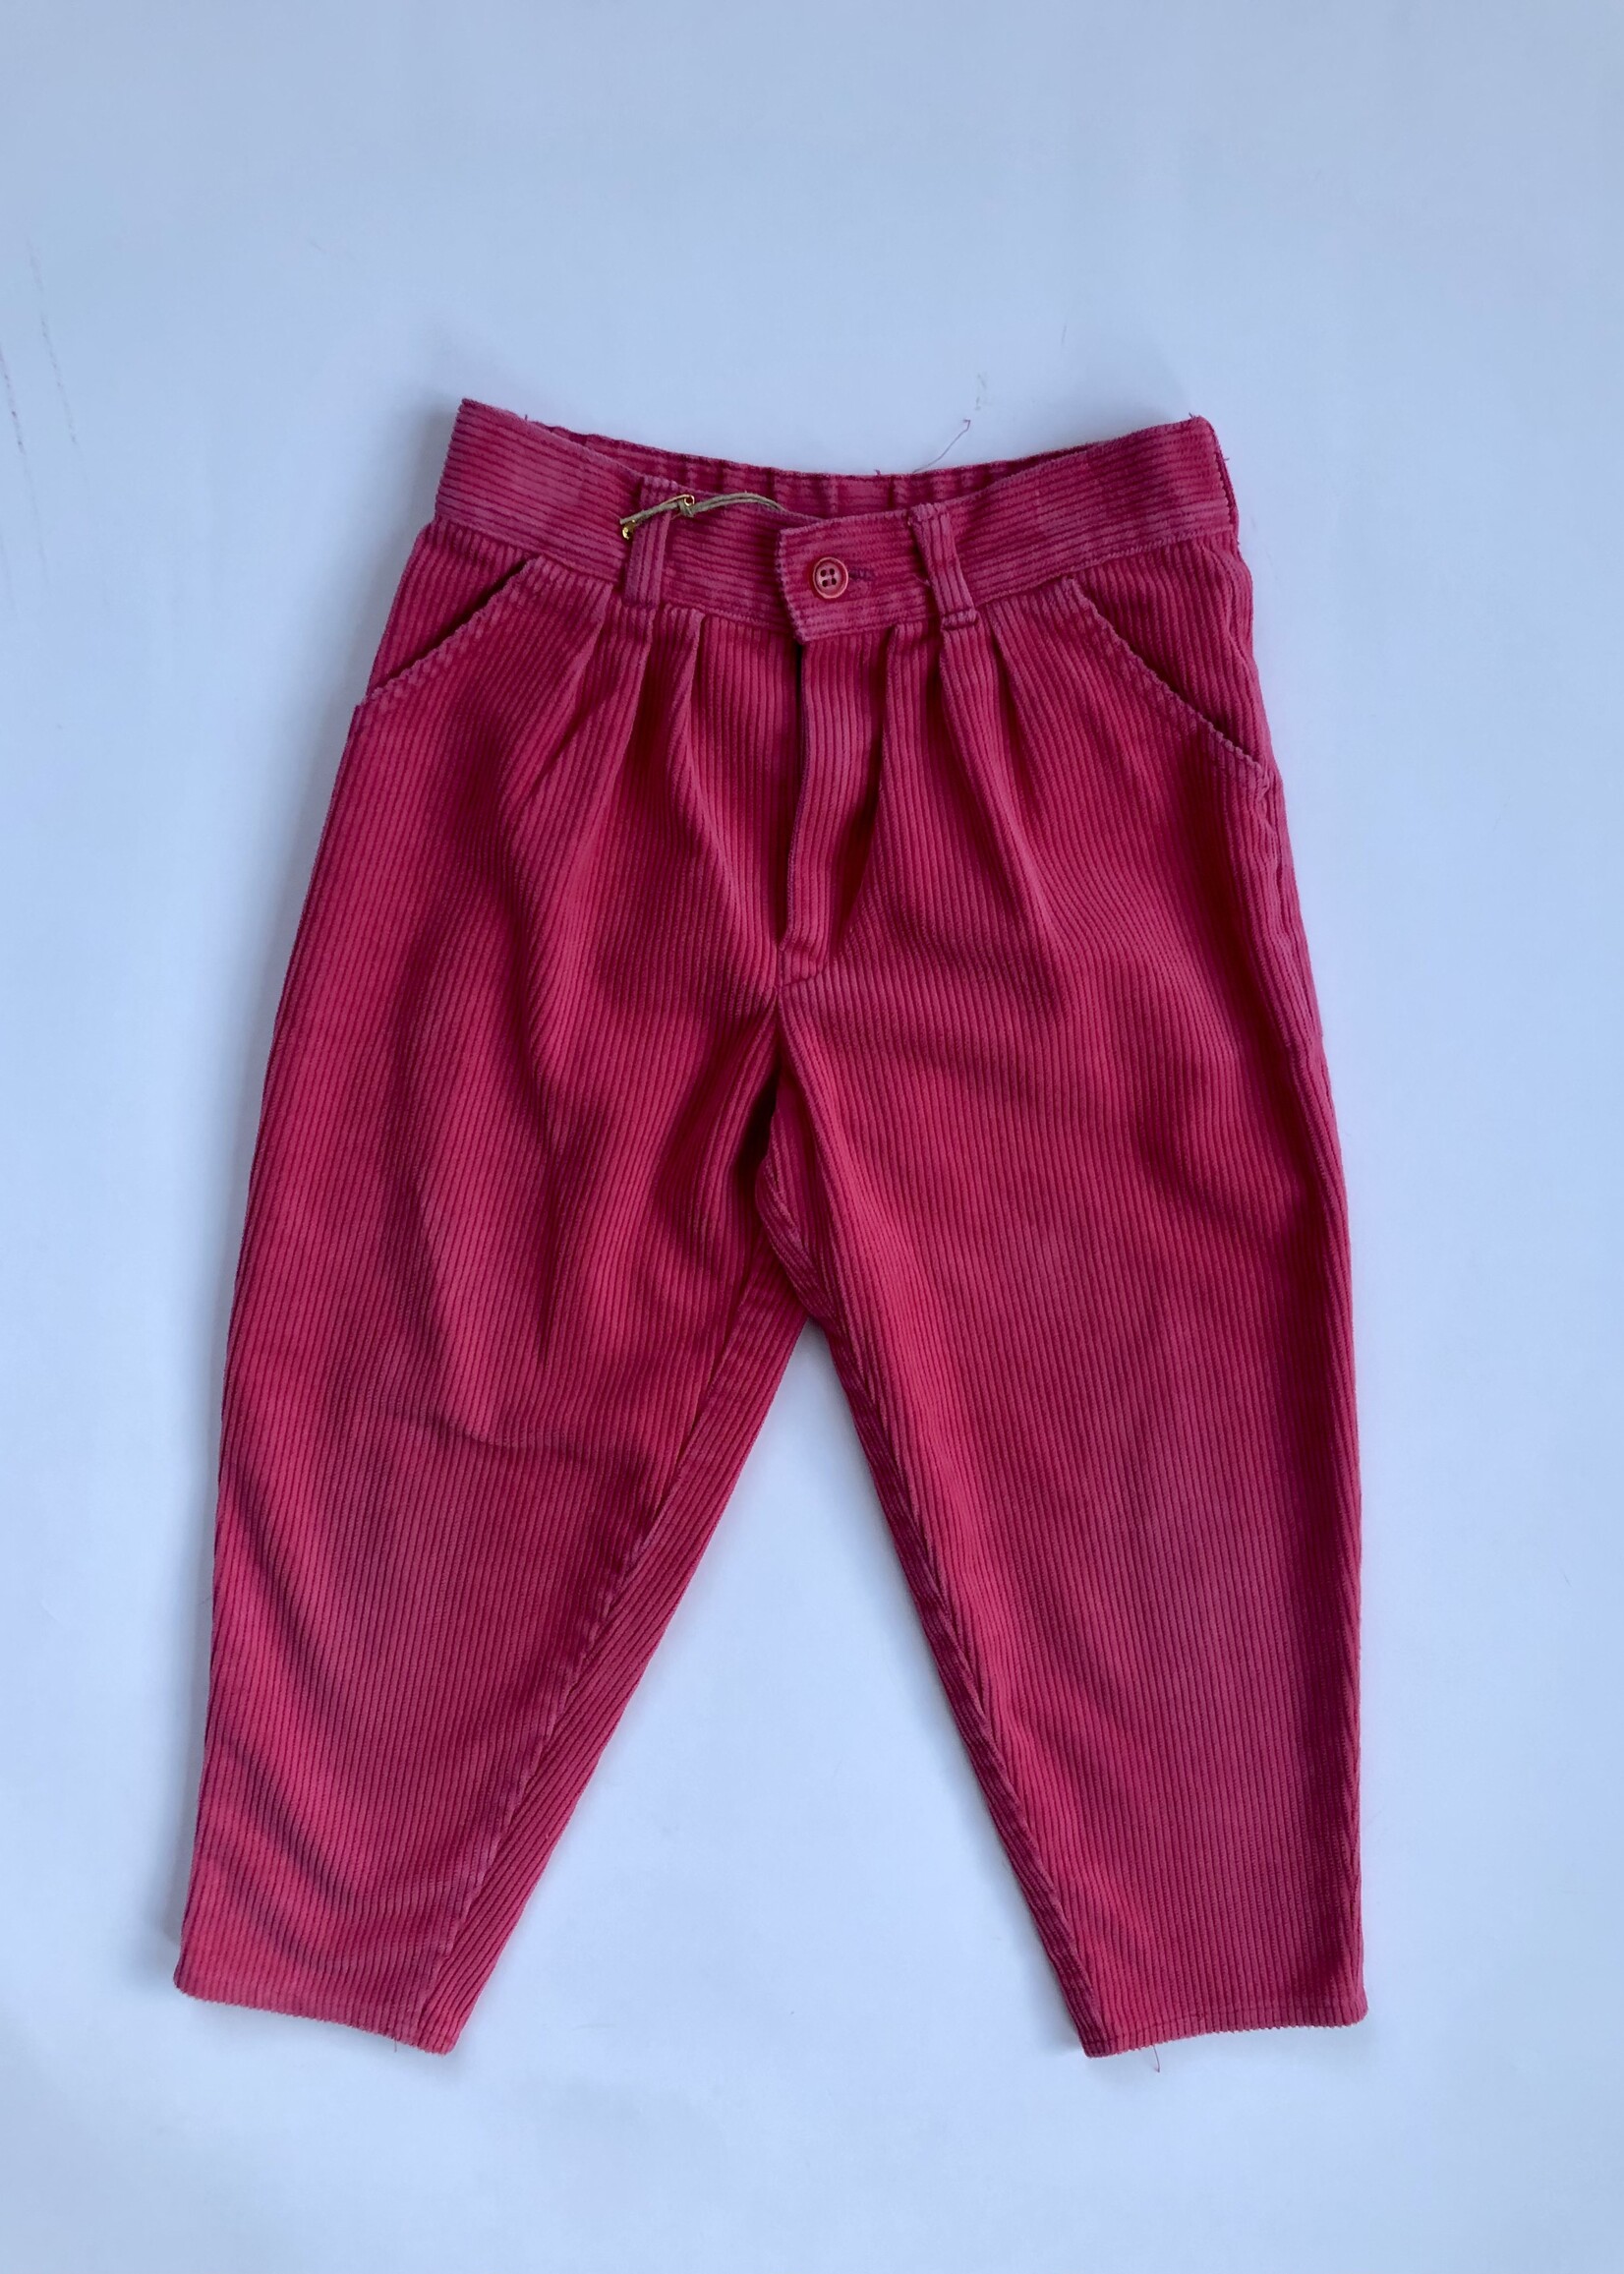 Pink corduory chino pants 4-5y